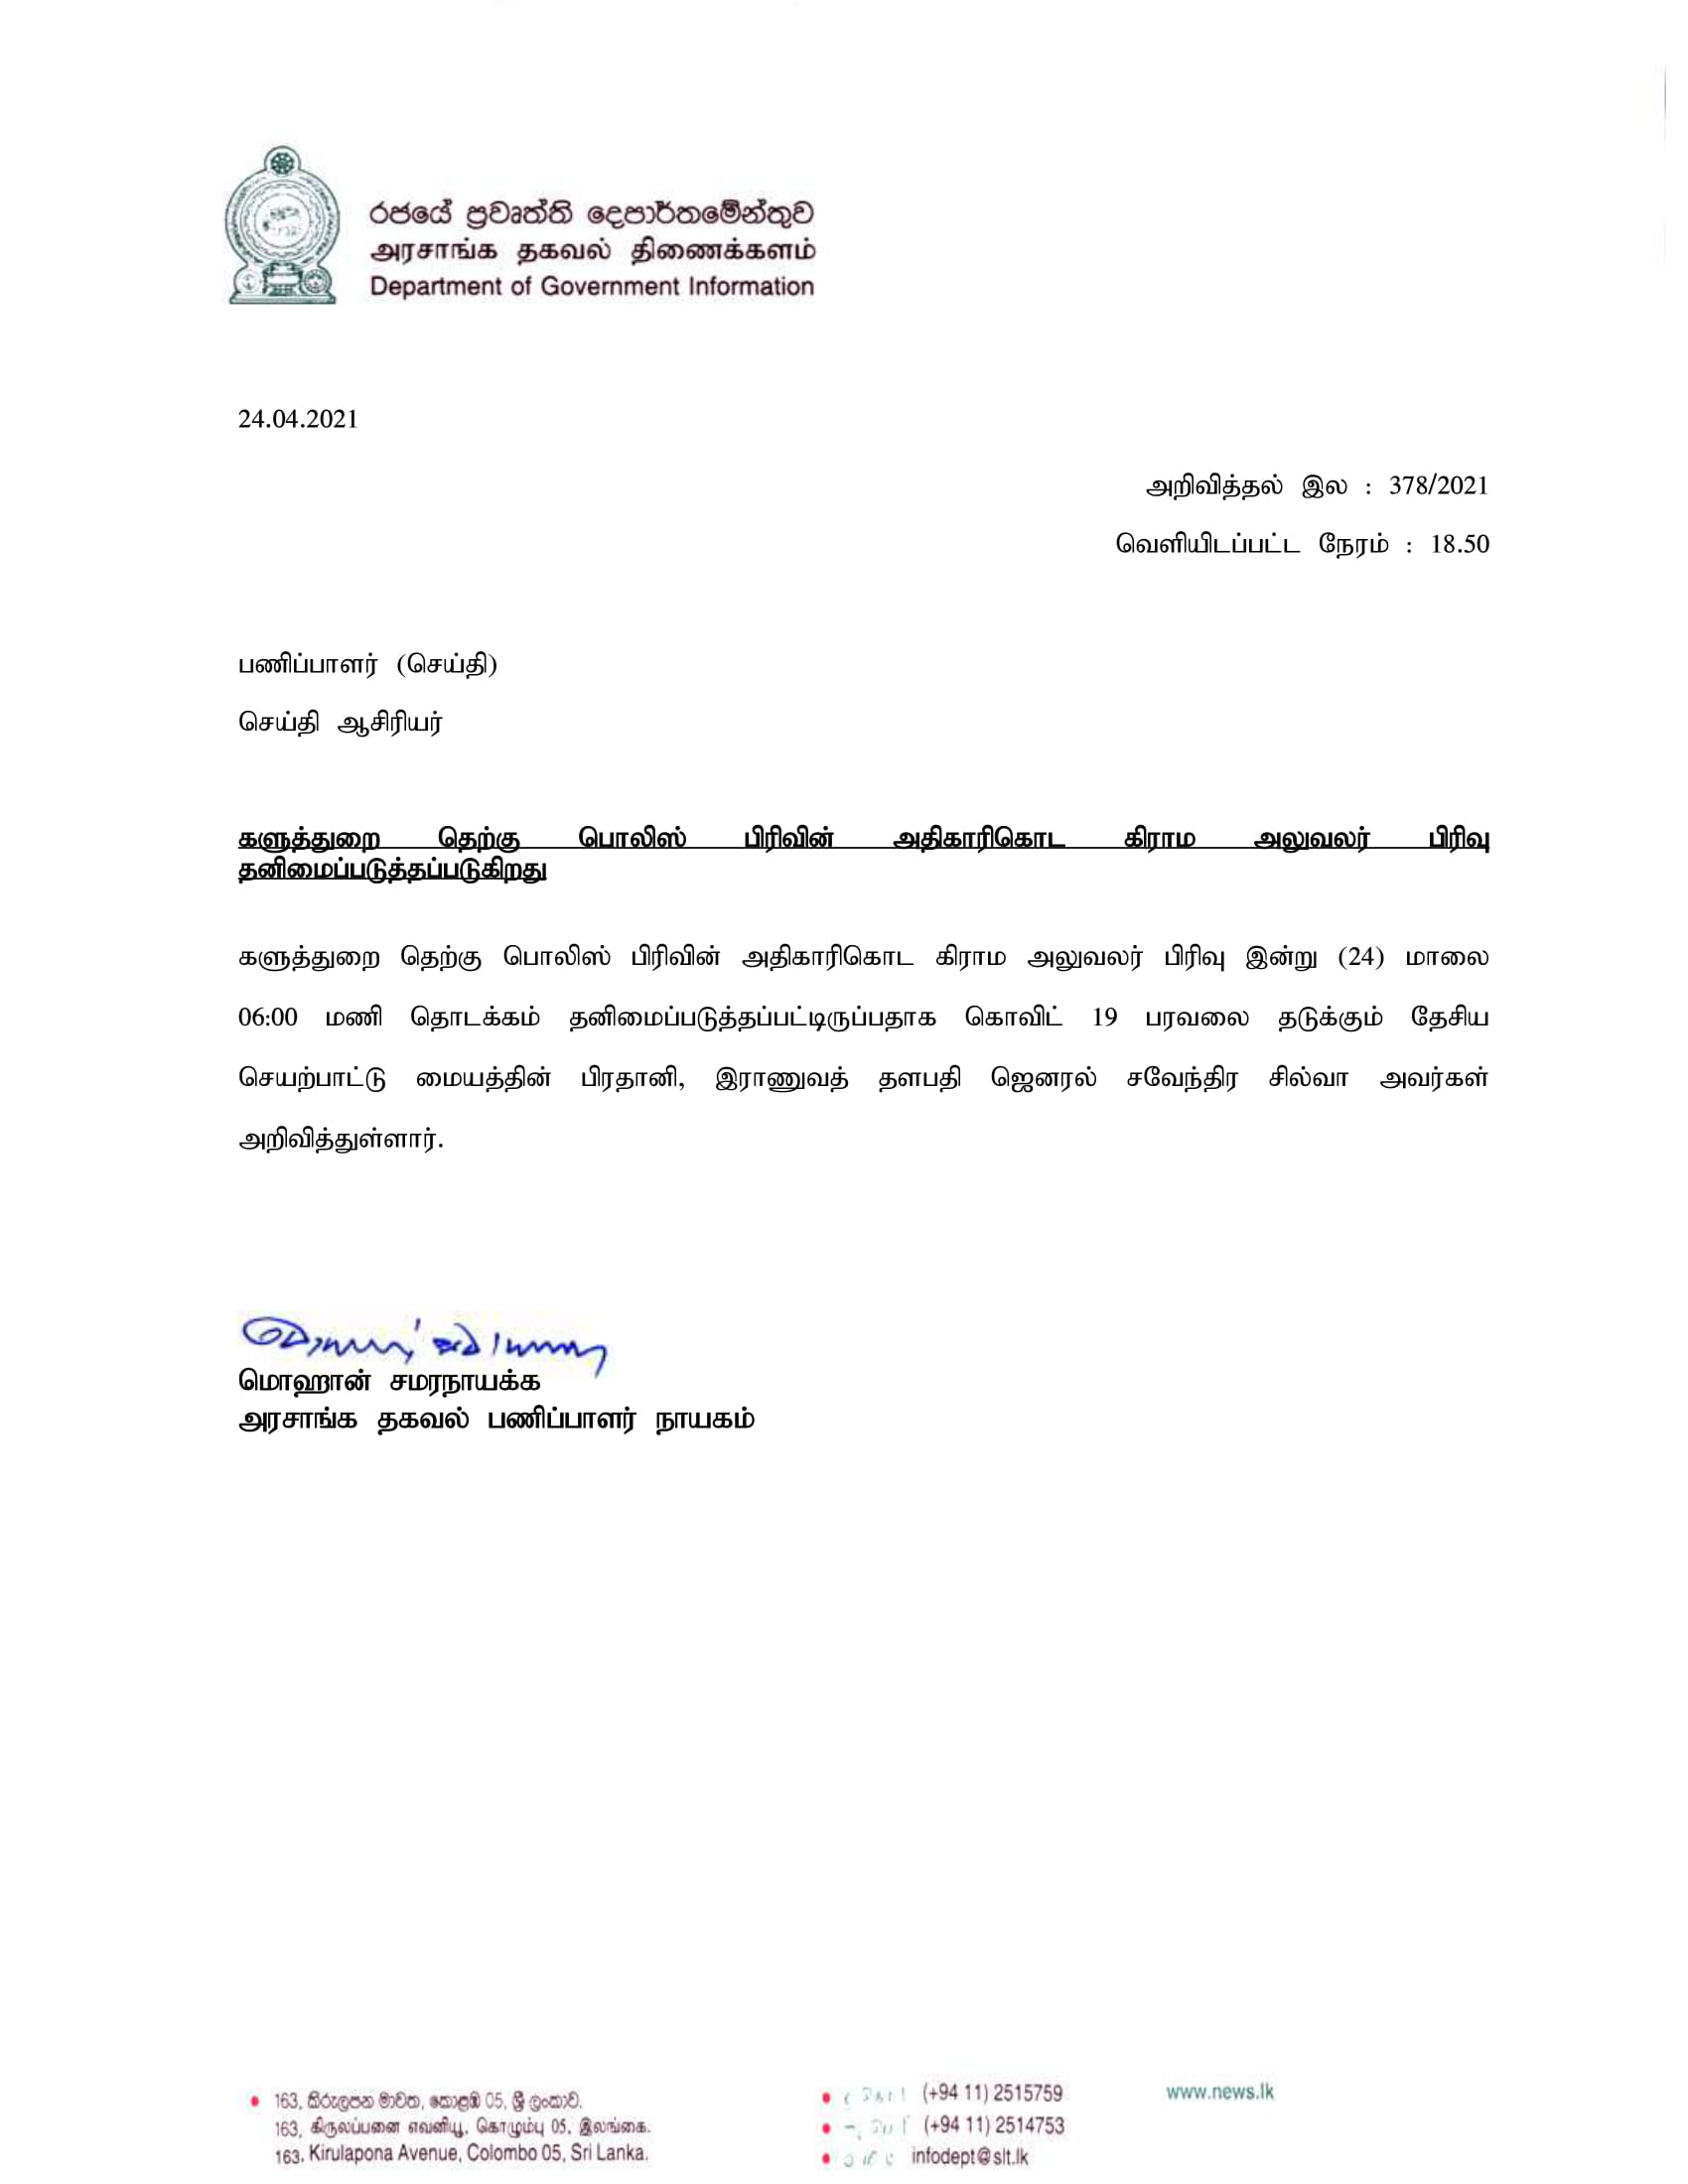 Press Release 378 Tamil 1